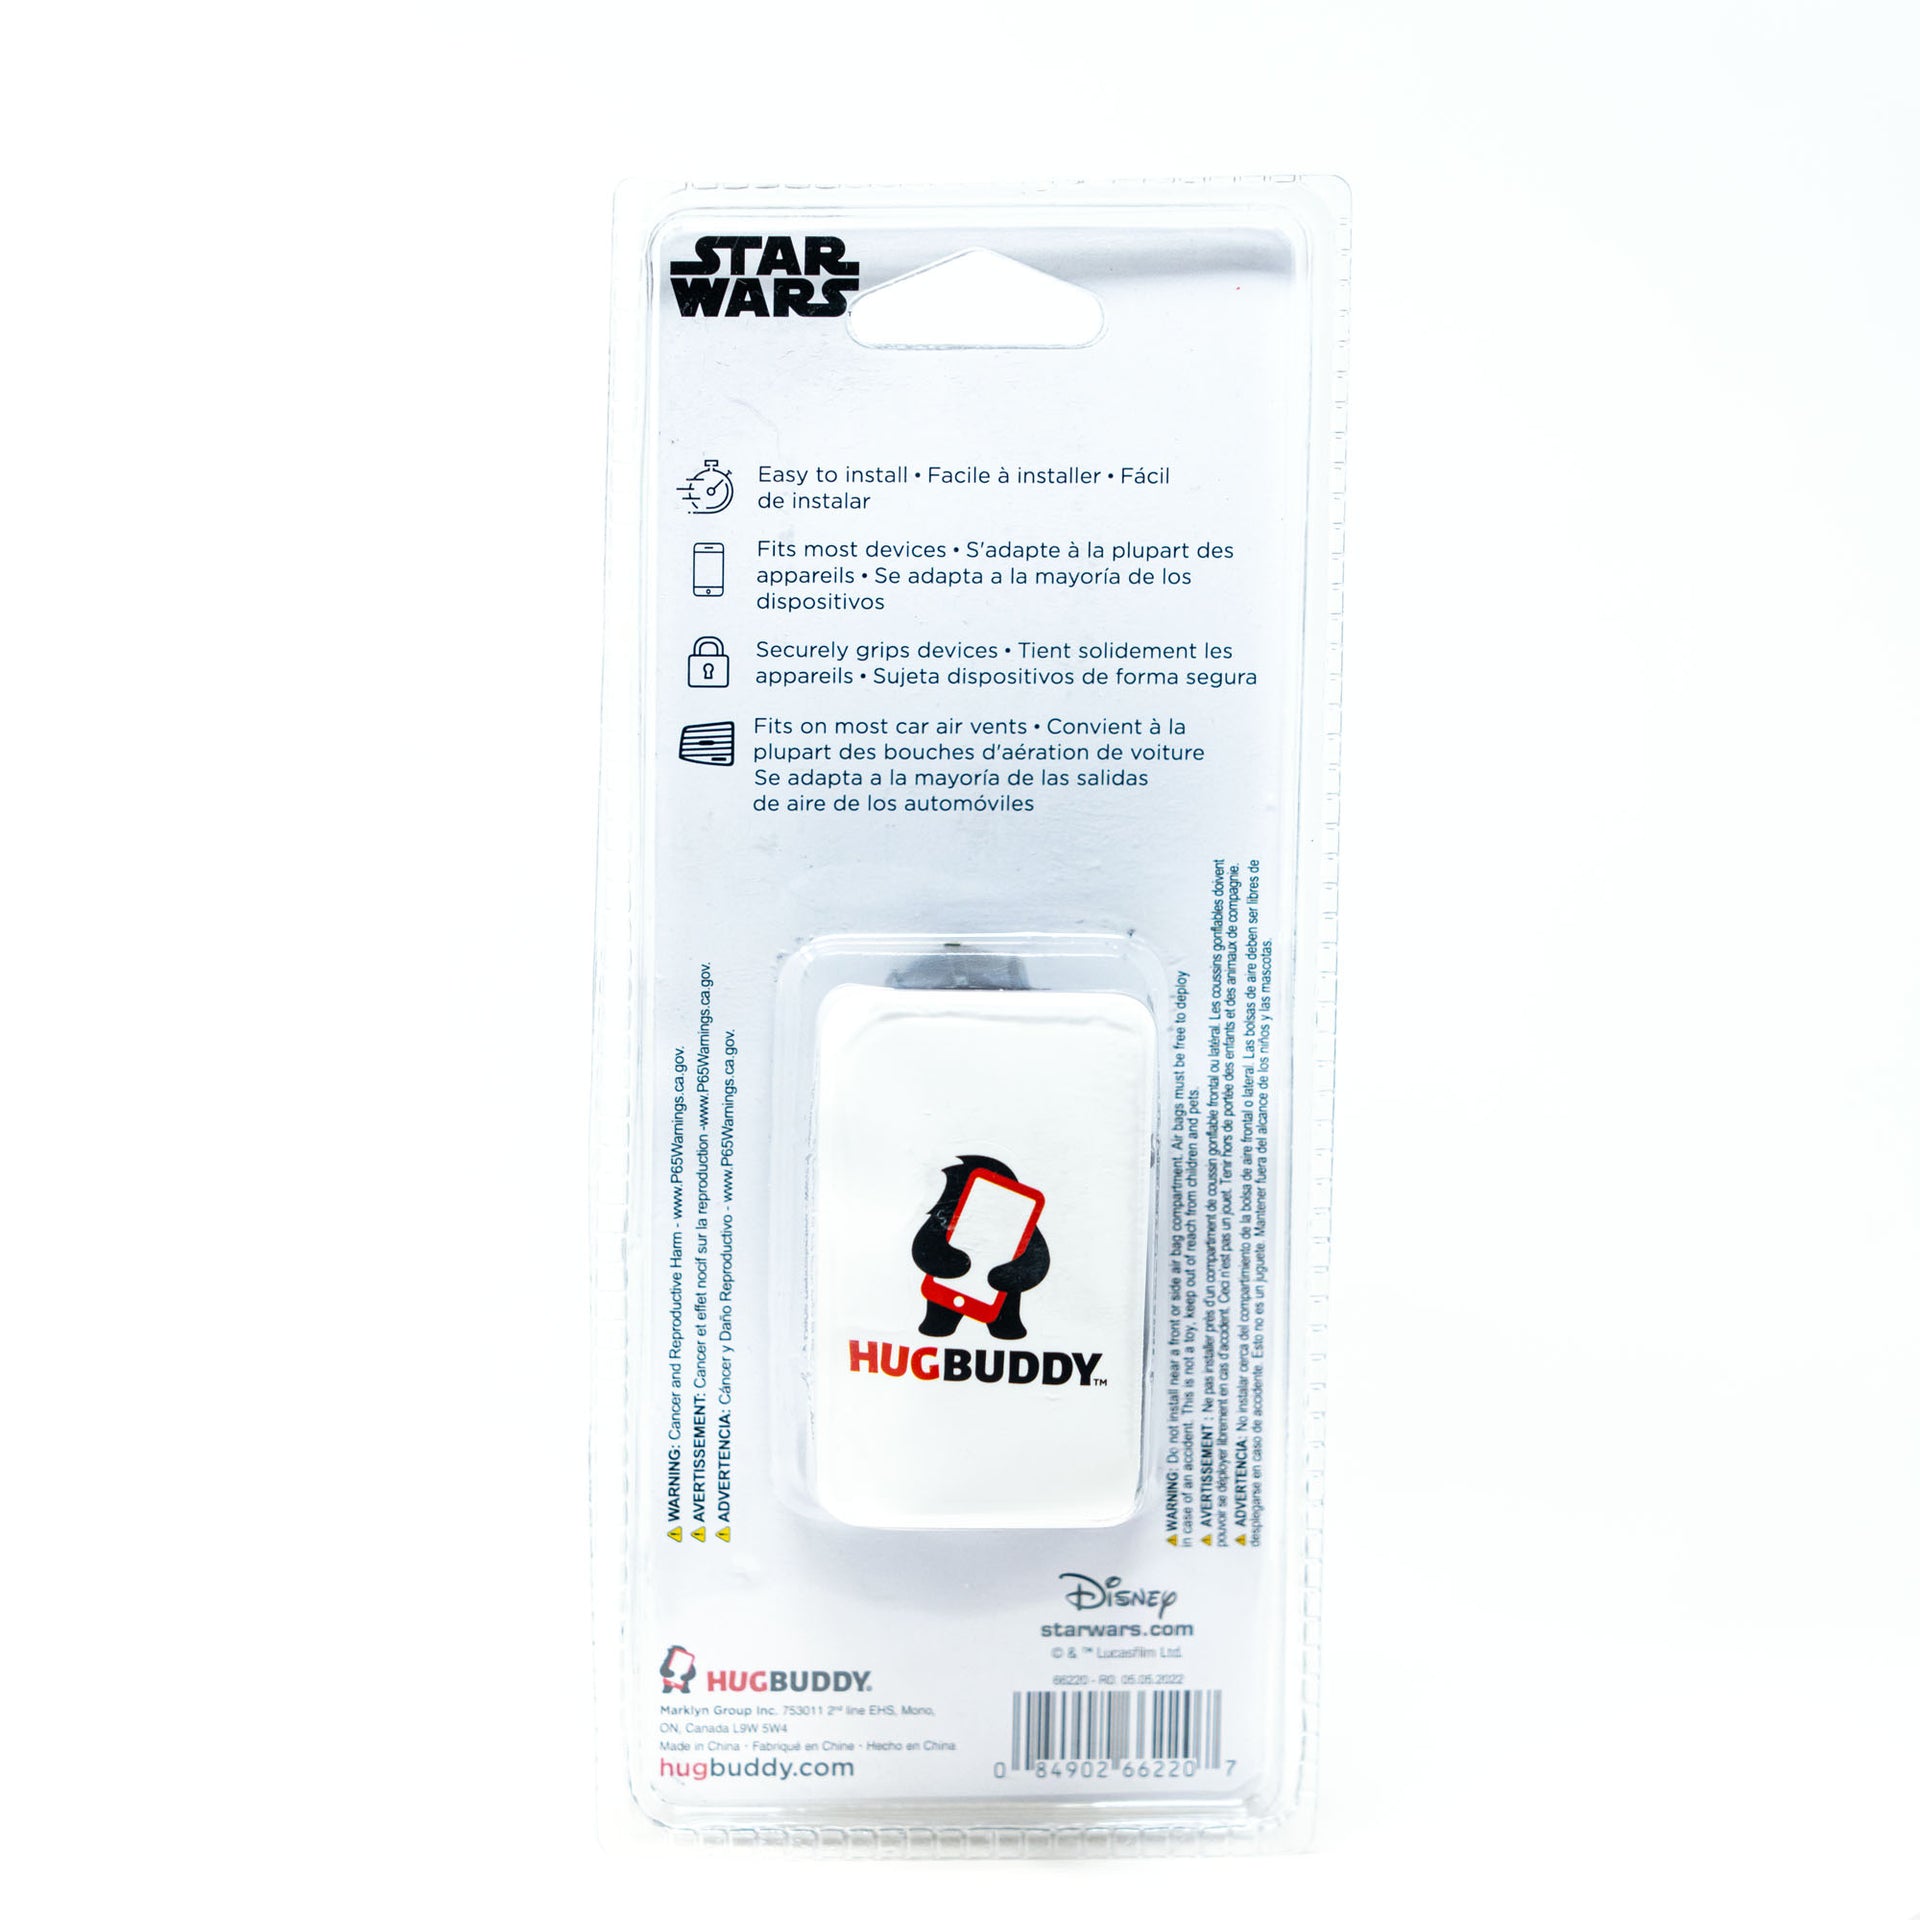 Image of Star Wars Boba Fett Hug Buddy packaging